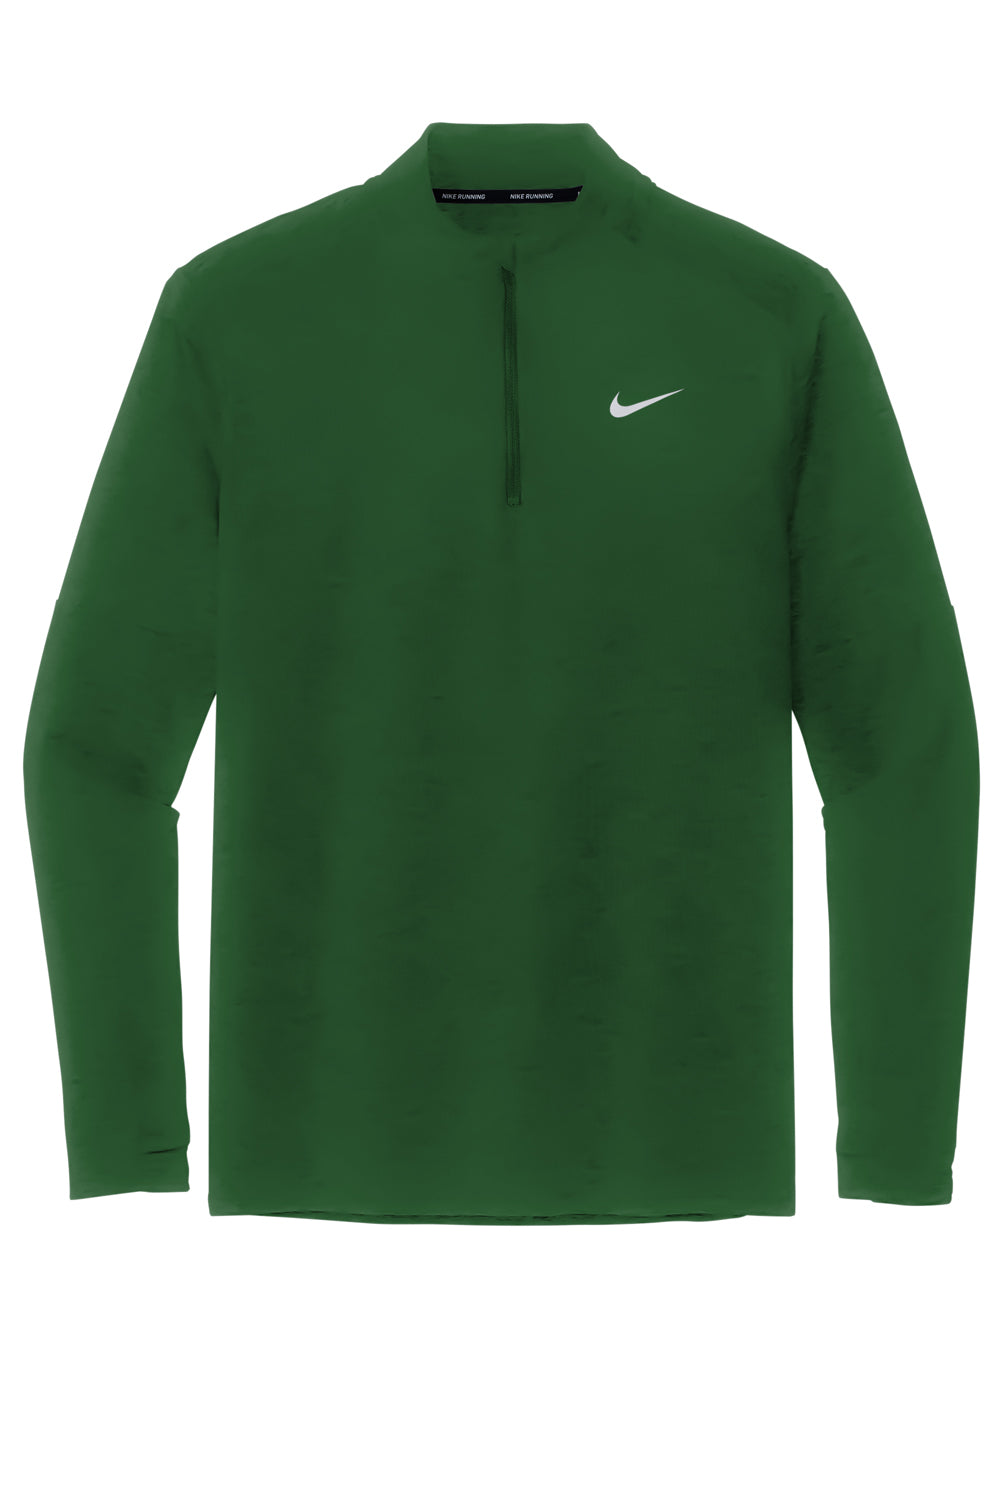 Nike NKDH4949 Mens Element Dri-Fit Moisture Wicking 1/4 Zip Sweatshirt Dark Green Flat Front